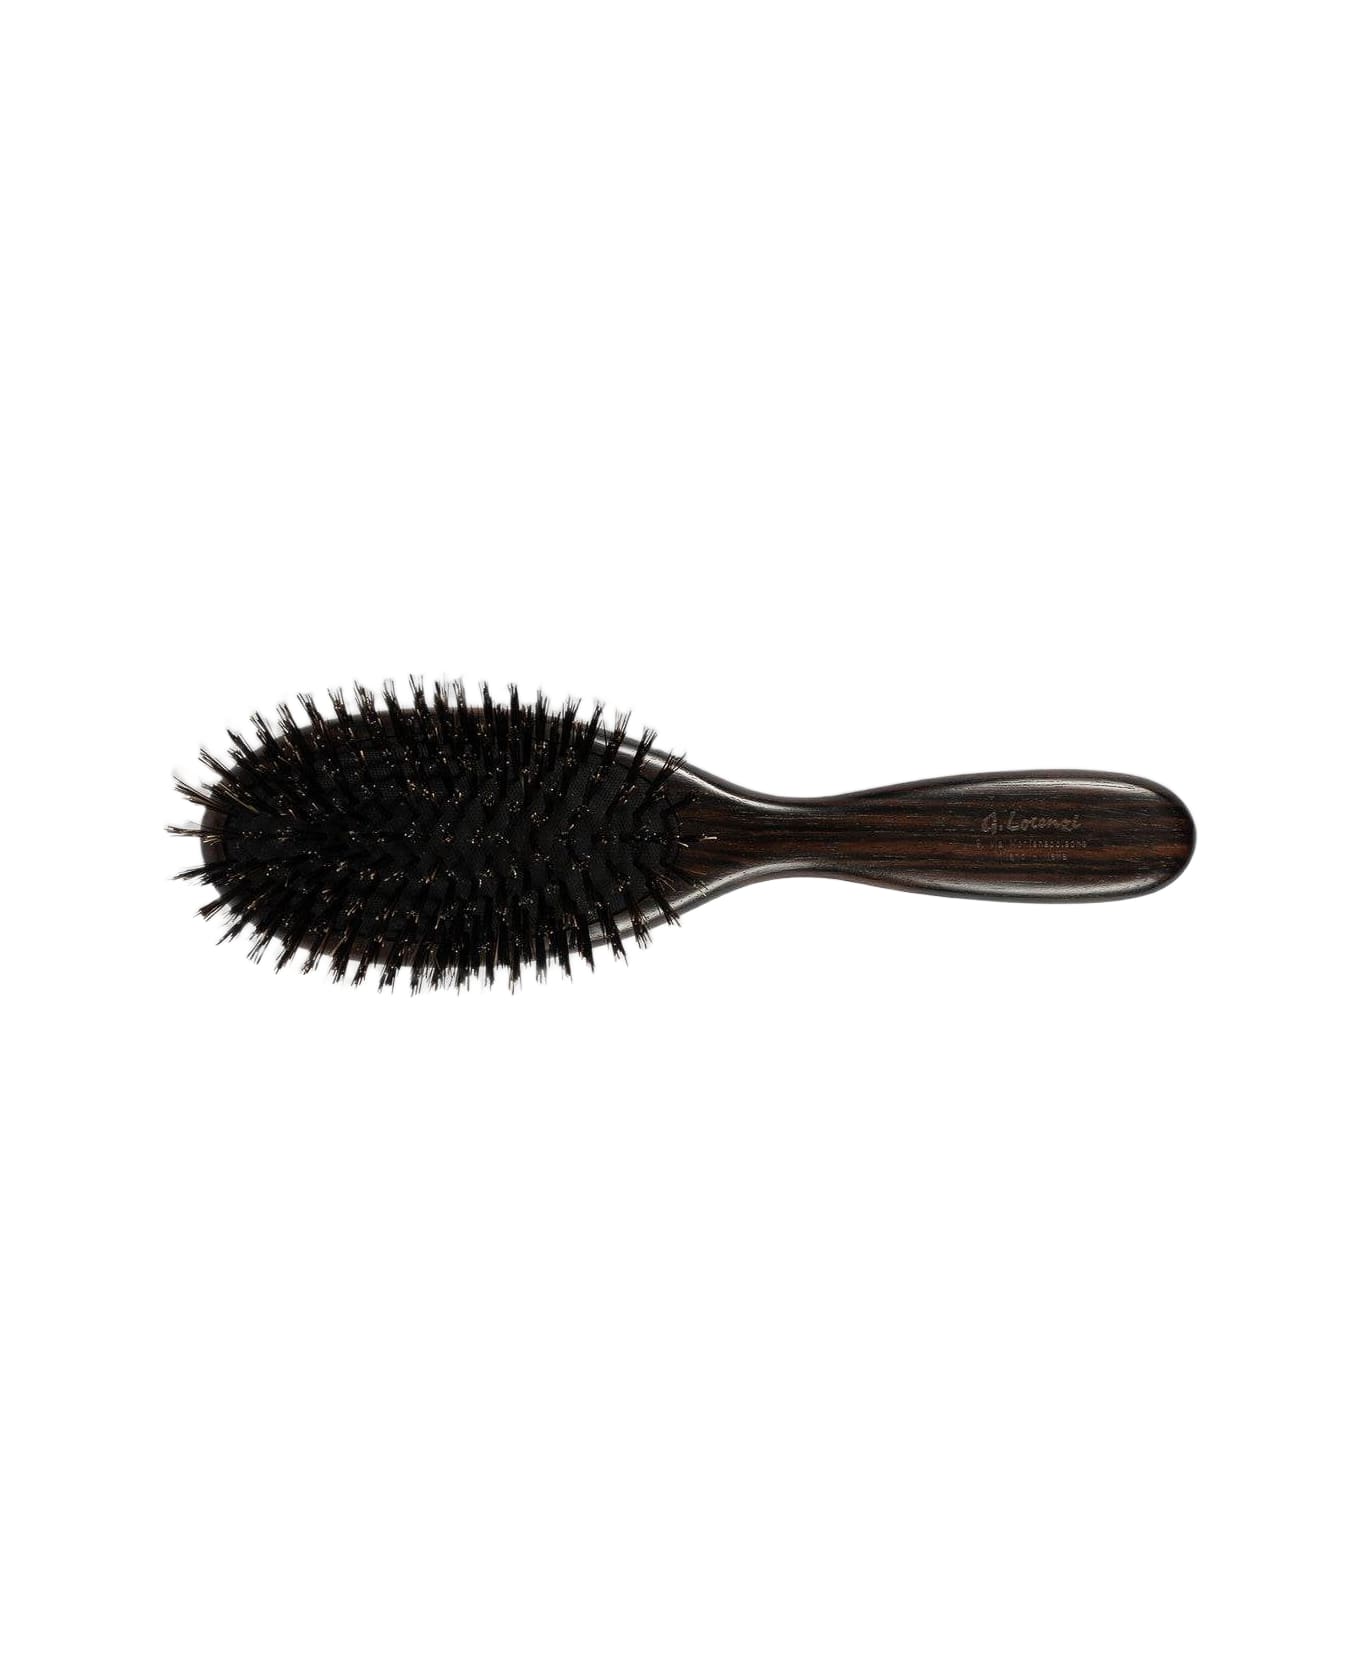 Larusmiani Head Brush Beauty - Black